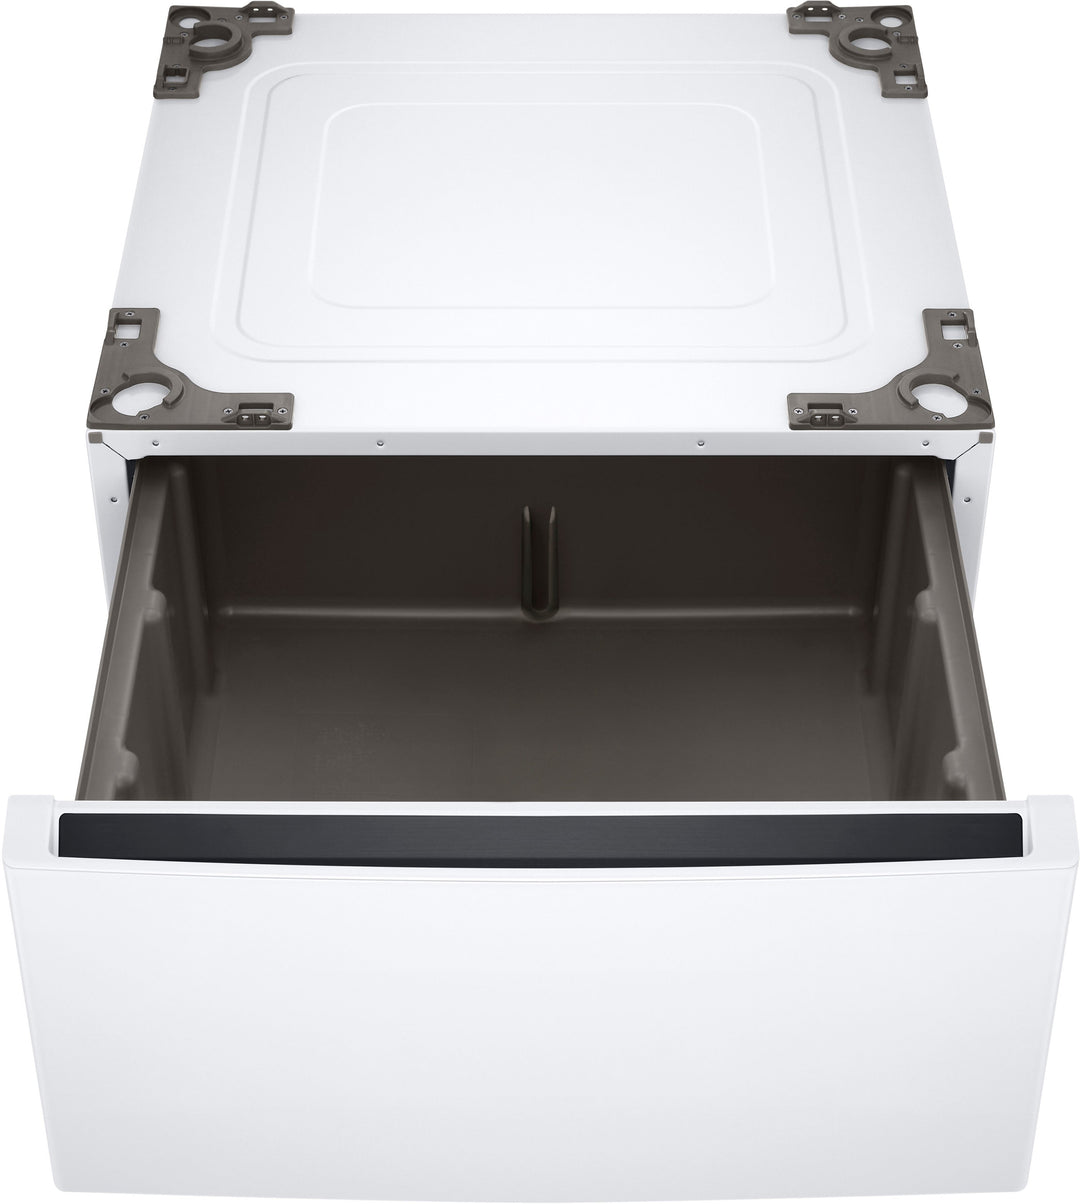 LG - 27" Laundry Pedestal with Storage Drawer - White_8